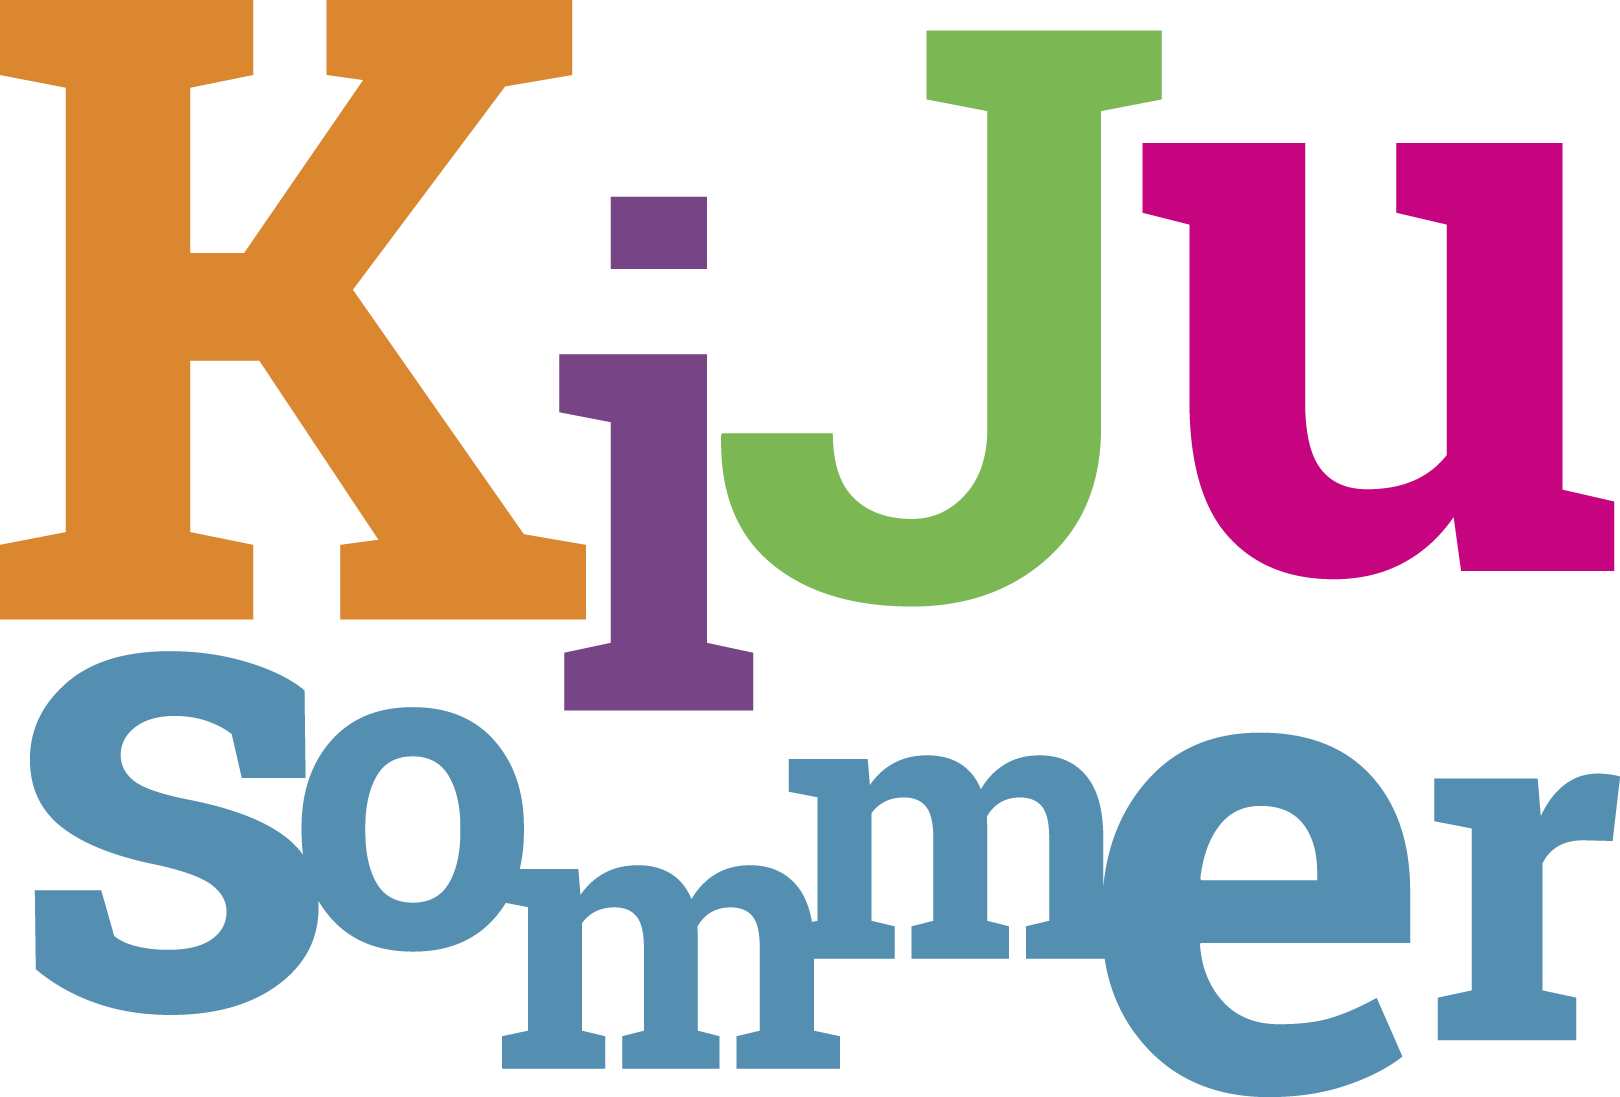 kiju-sommer - logo ohne datum Kopie